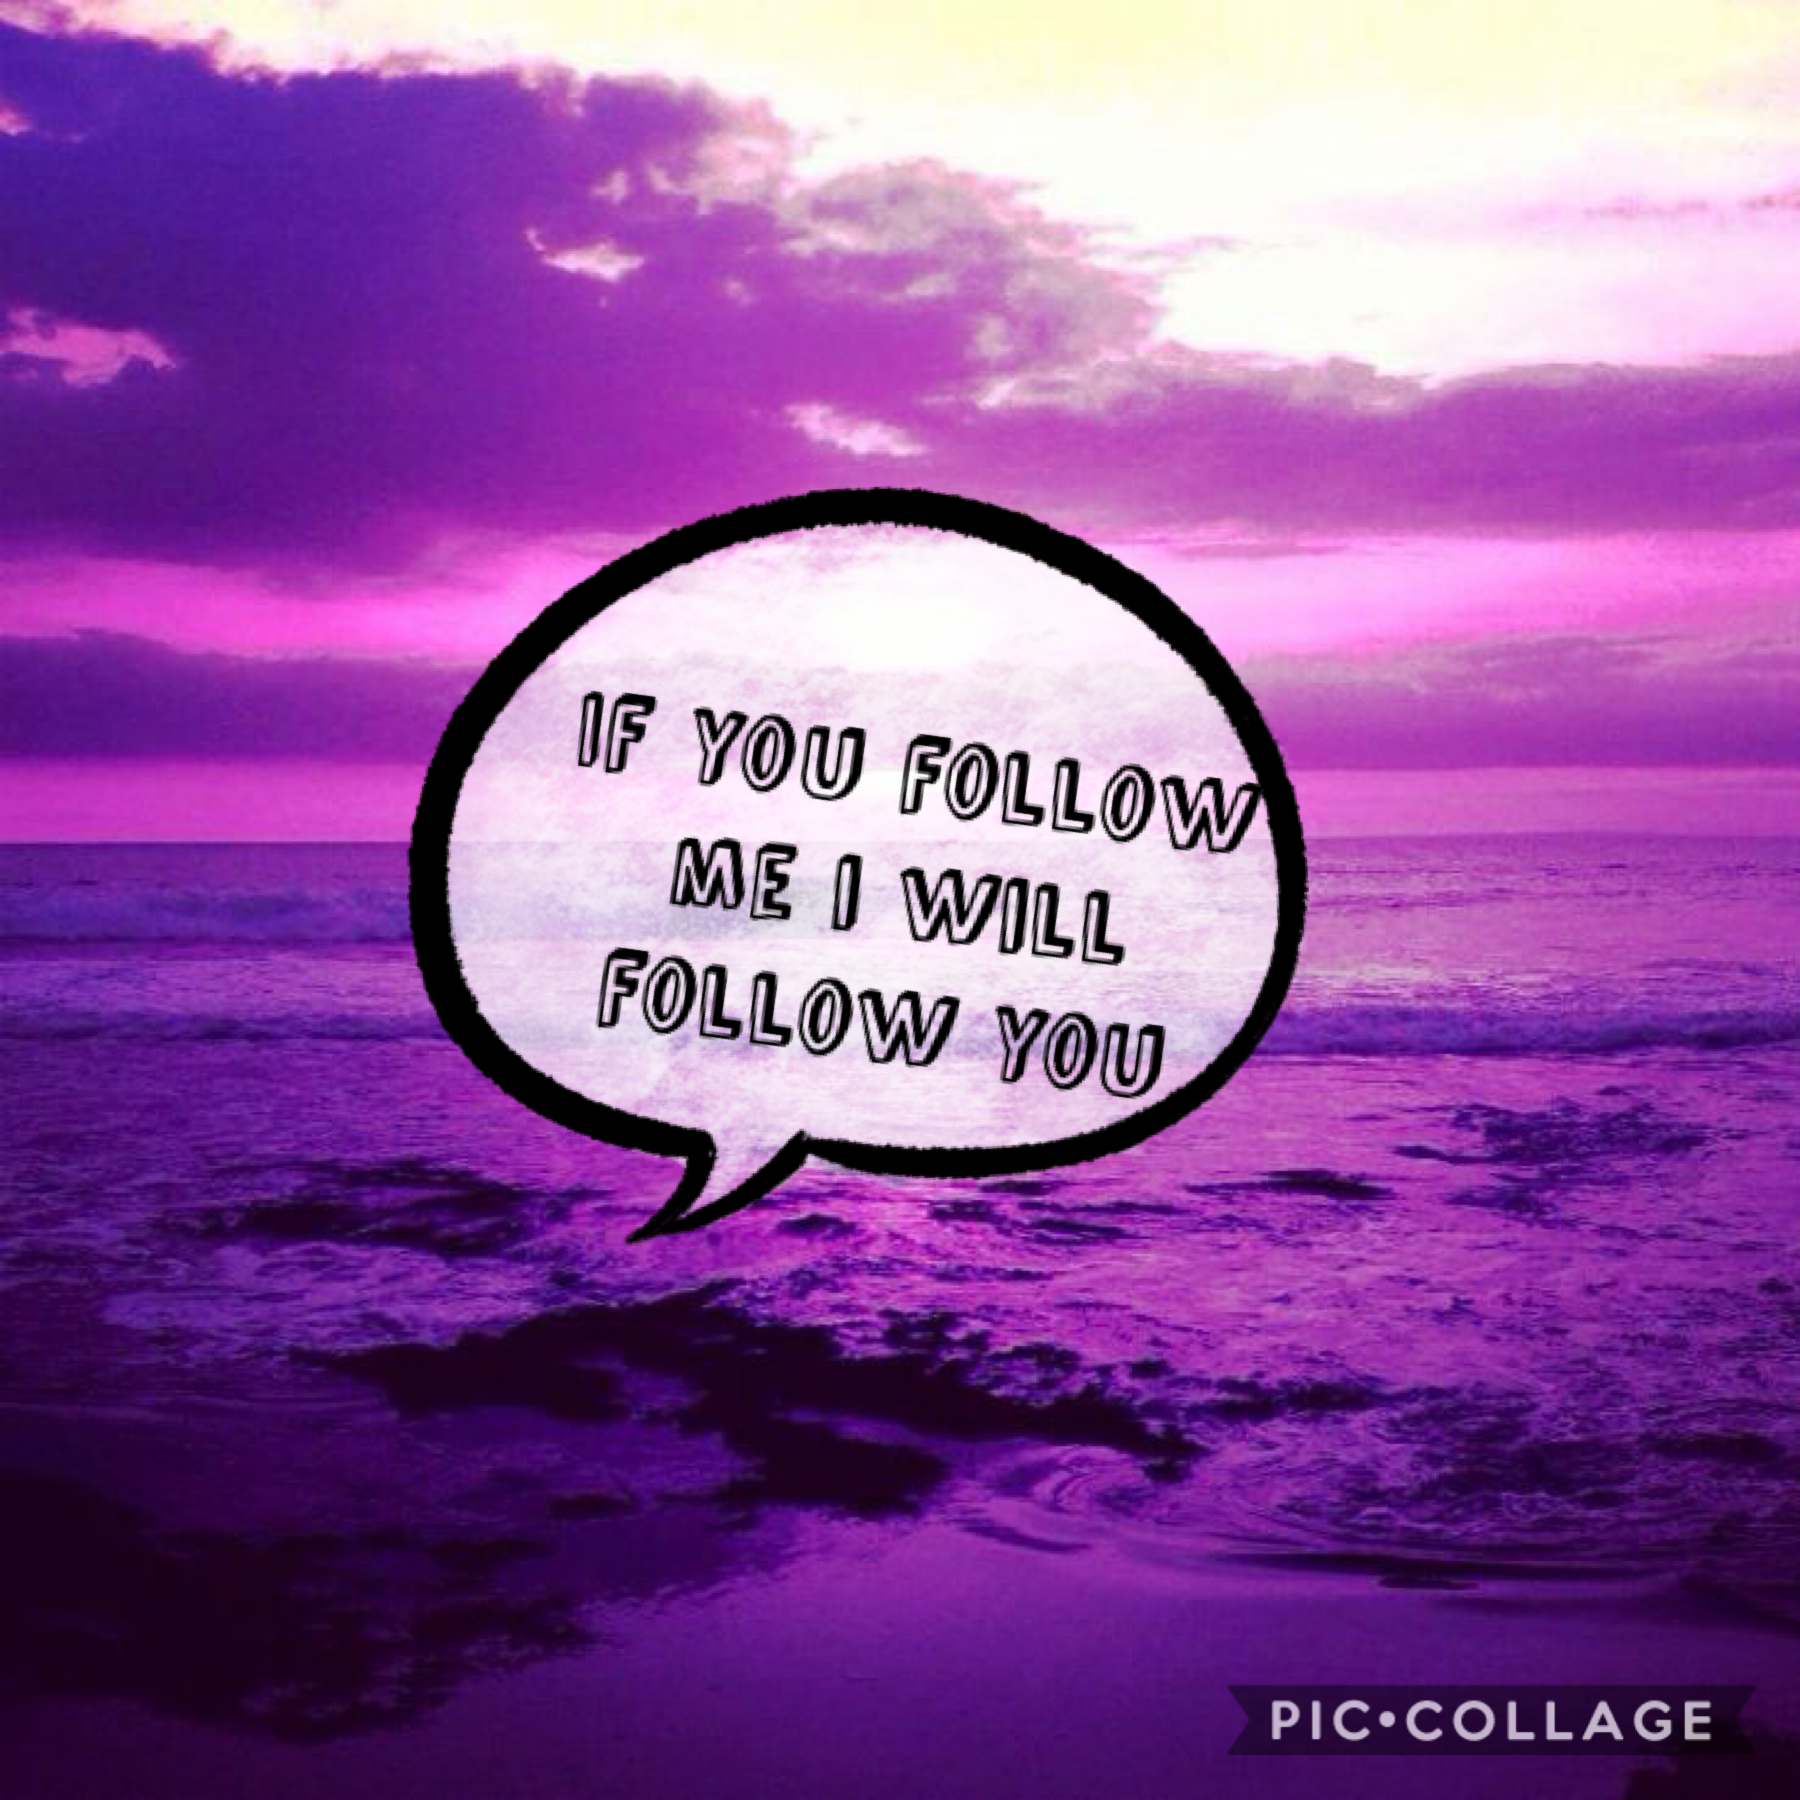 Please follow me ! 😆